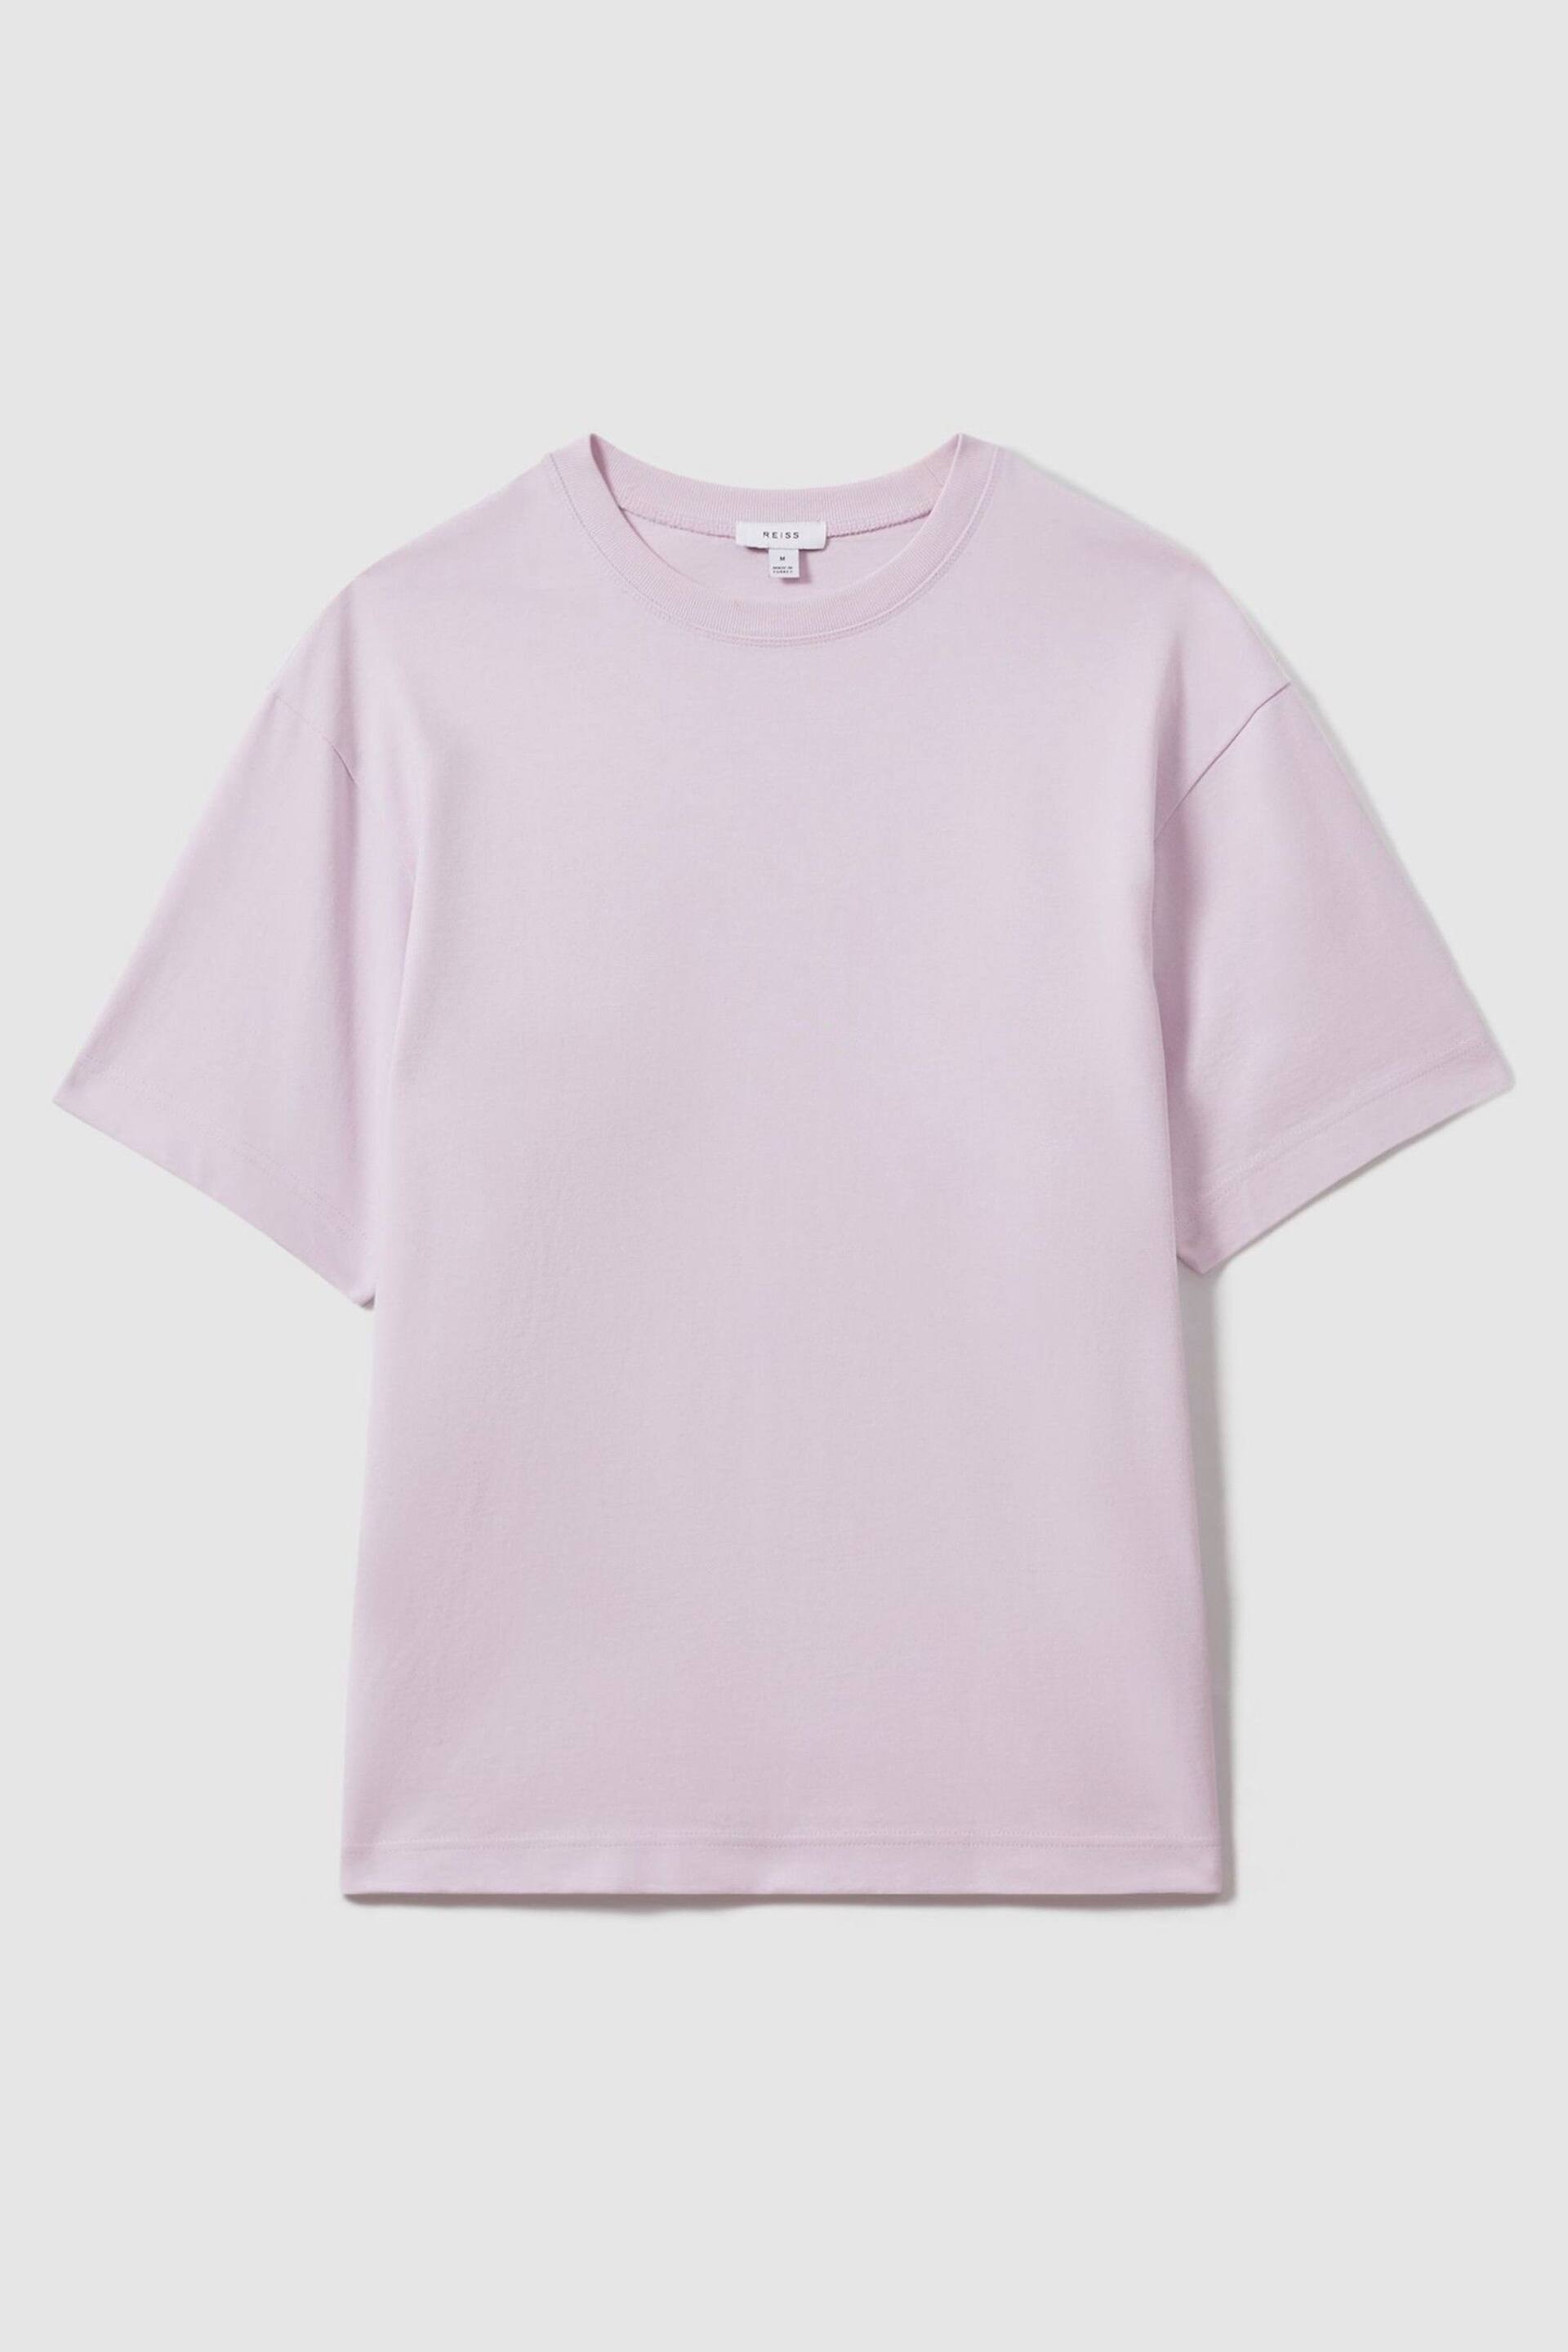 Reiss Light Lilac Tate Oversized Garment Dye T-Shirt - Image 2 of 5